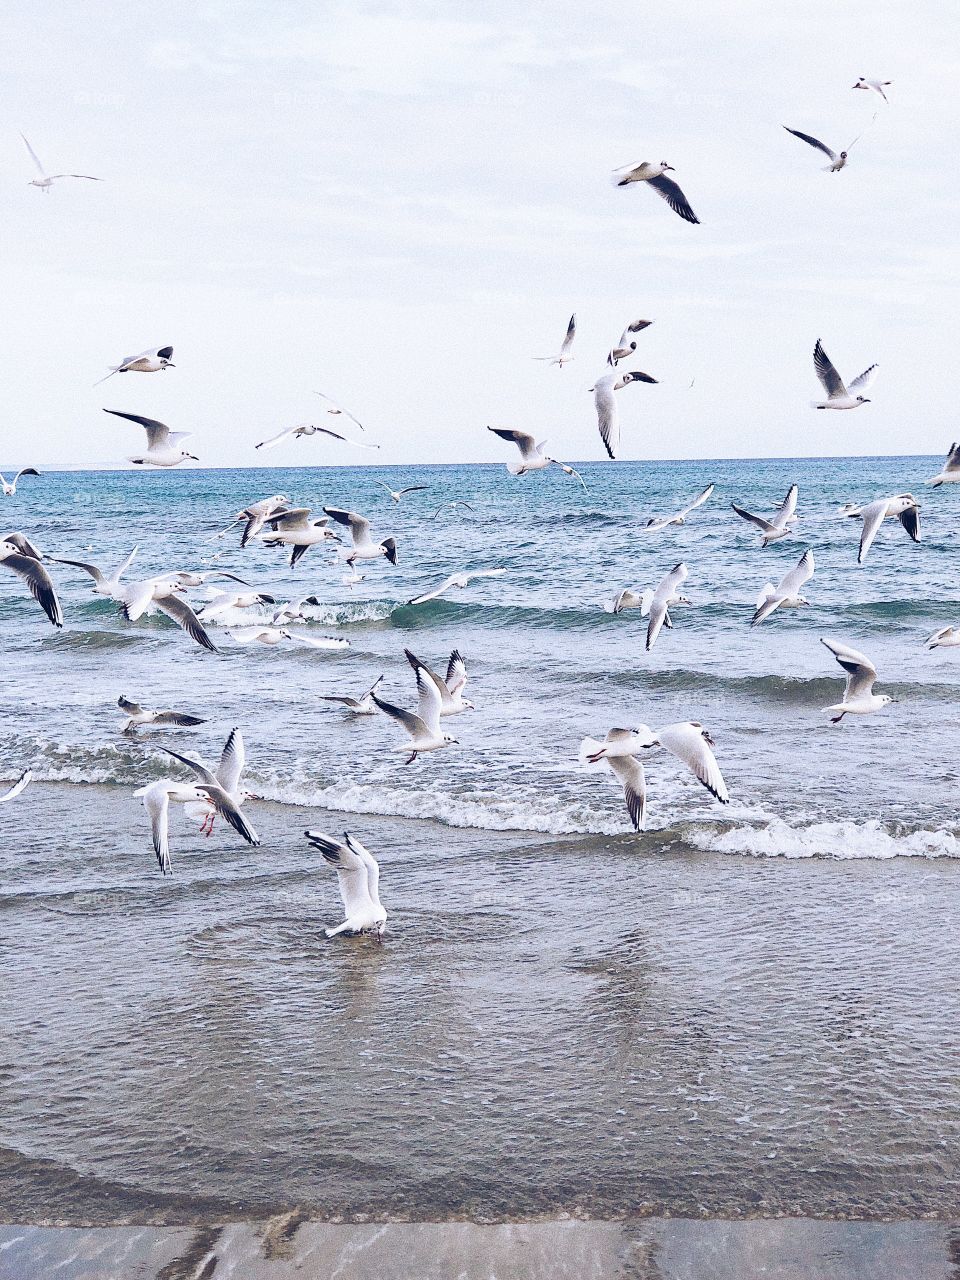 Seagulls in the ocean 